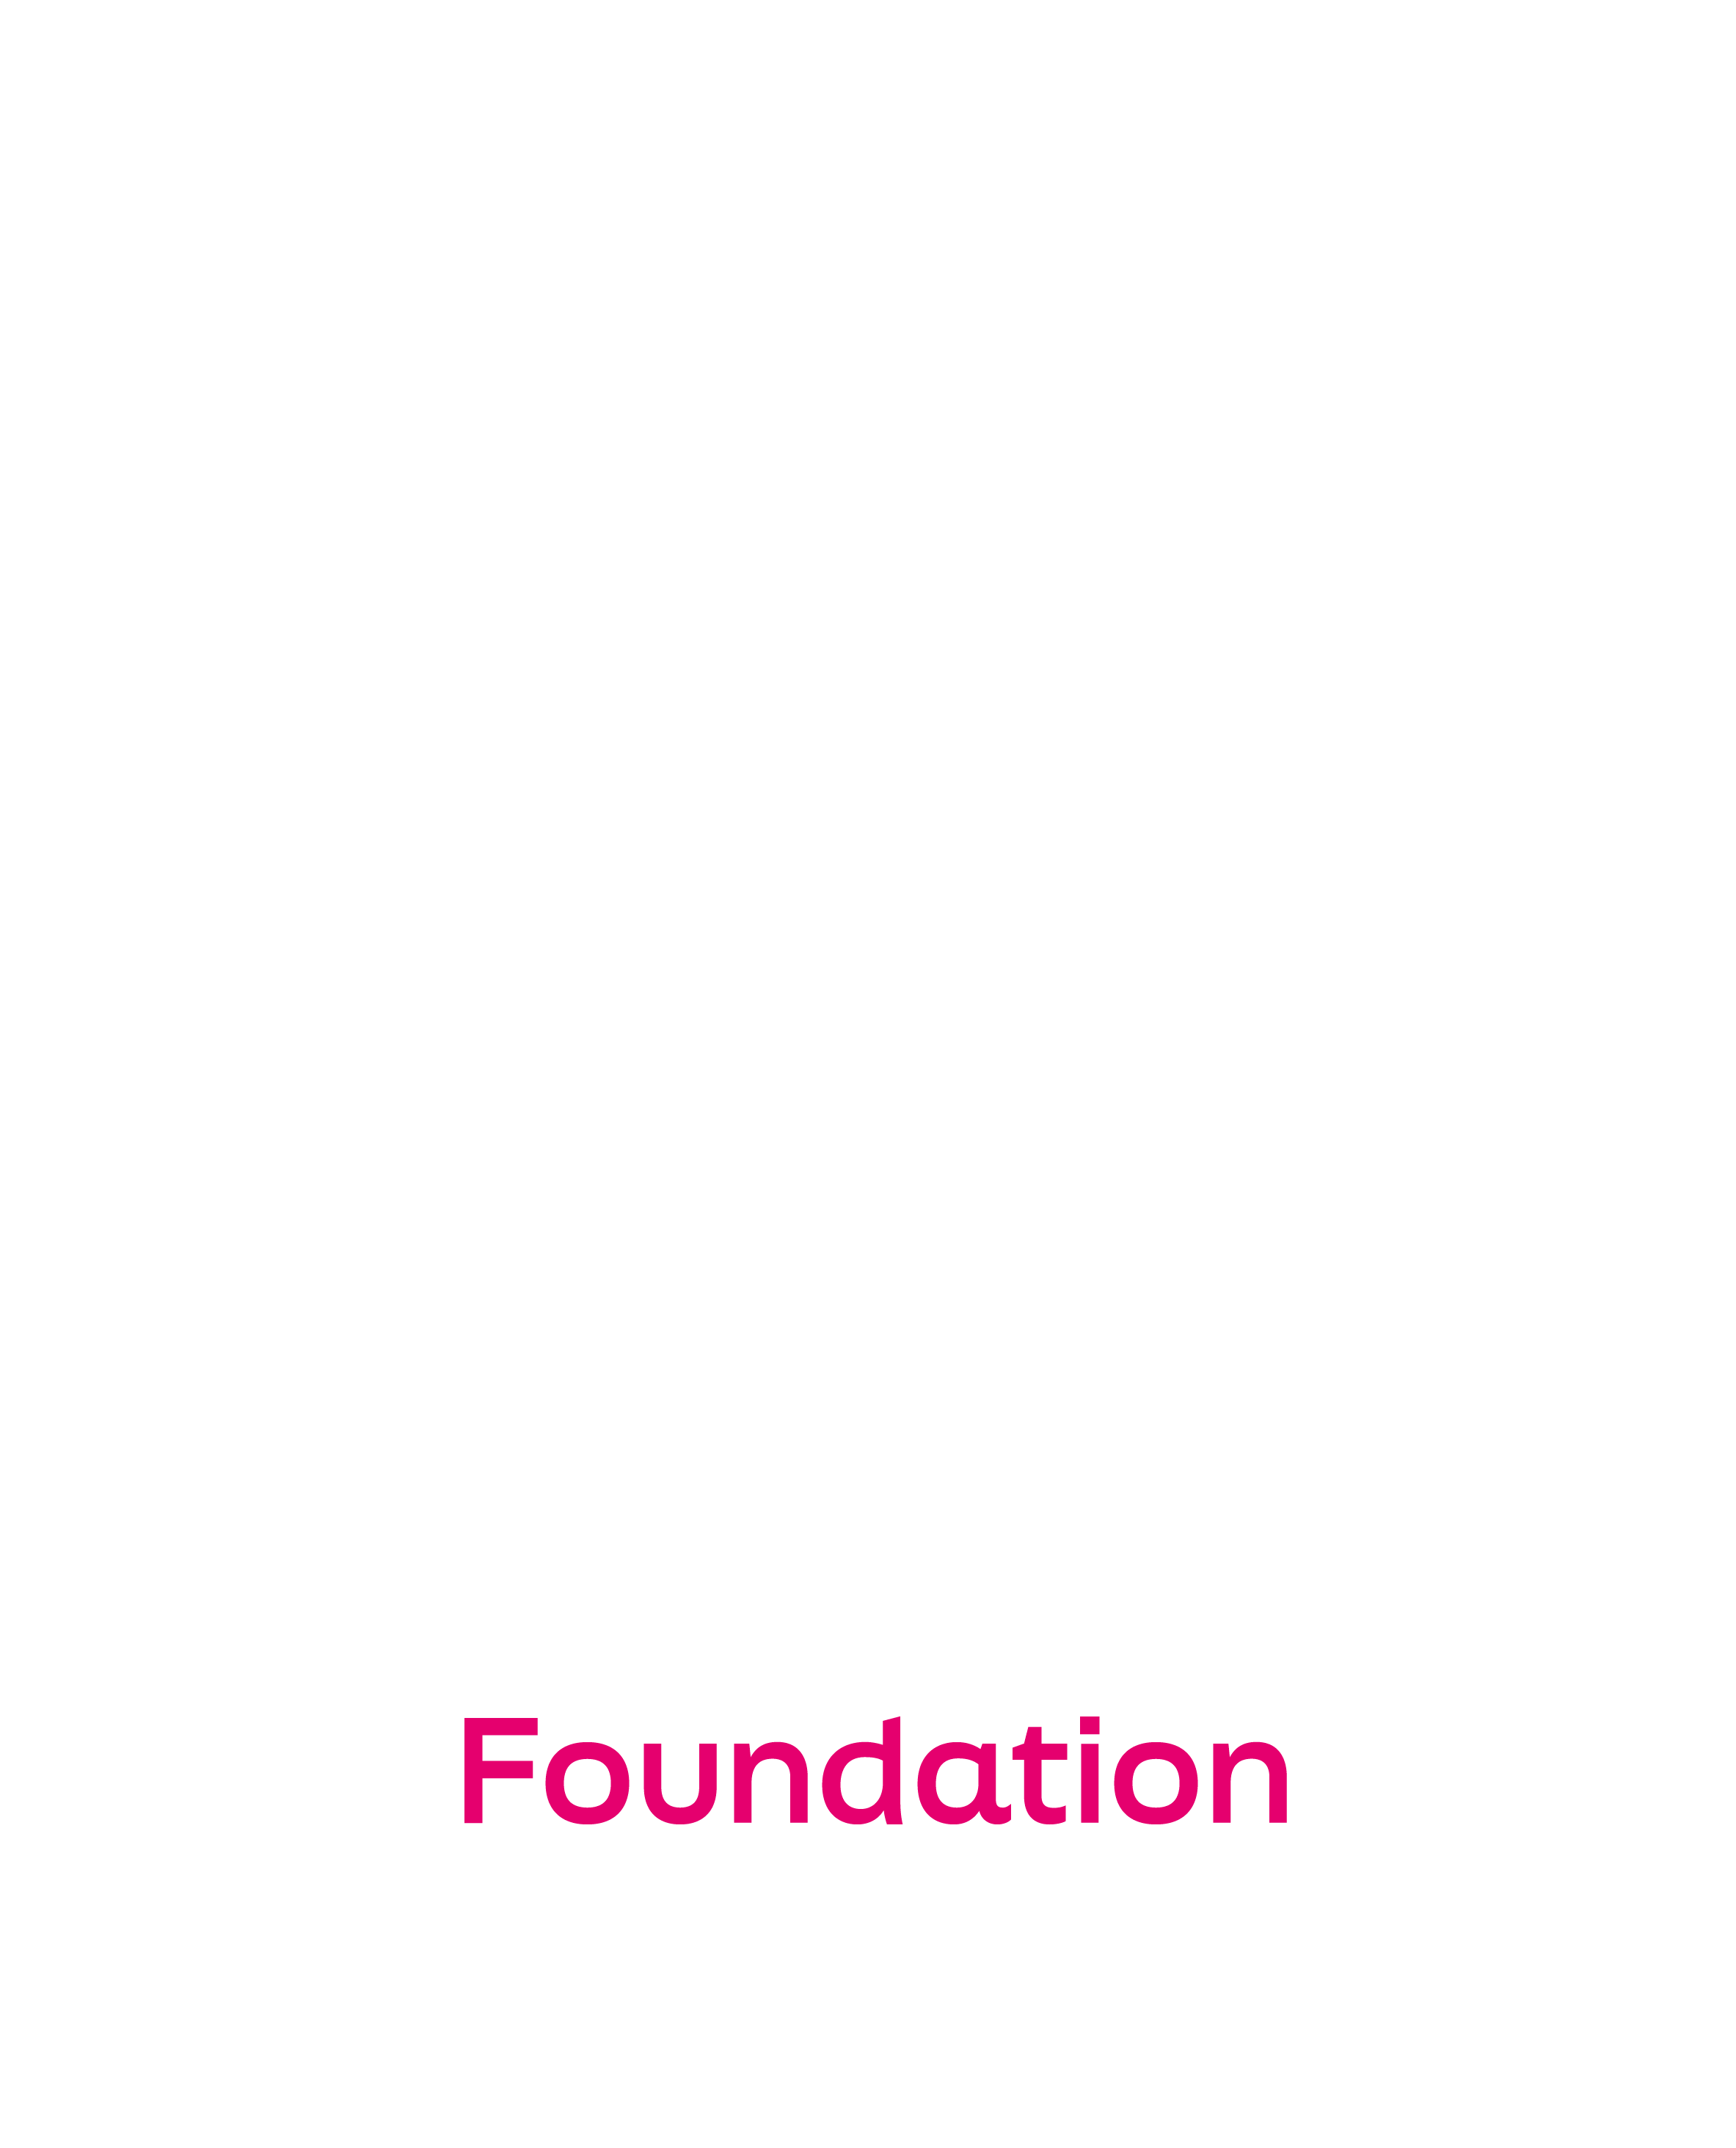 LRF logo